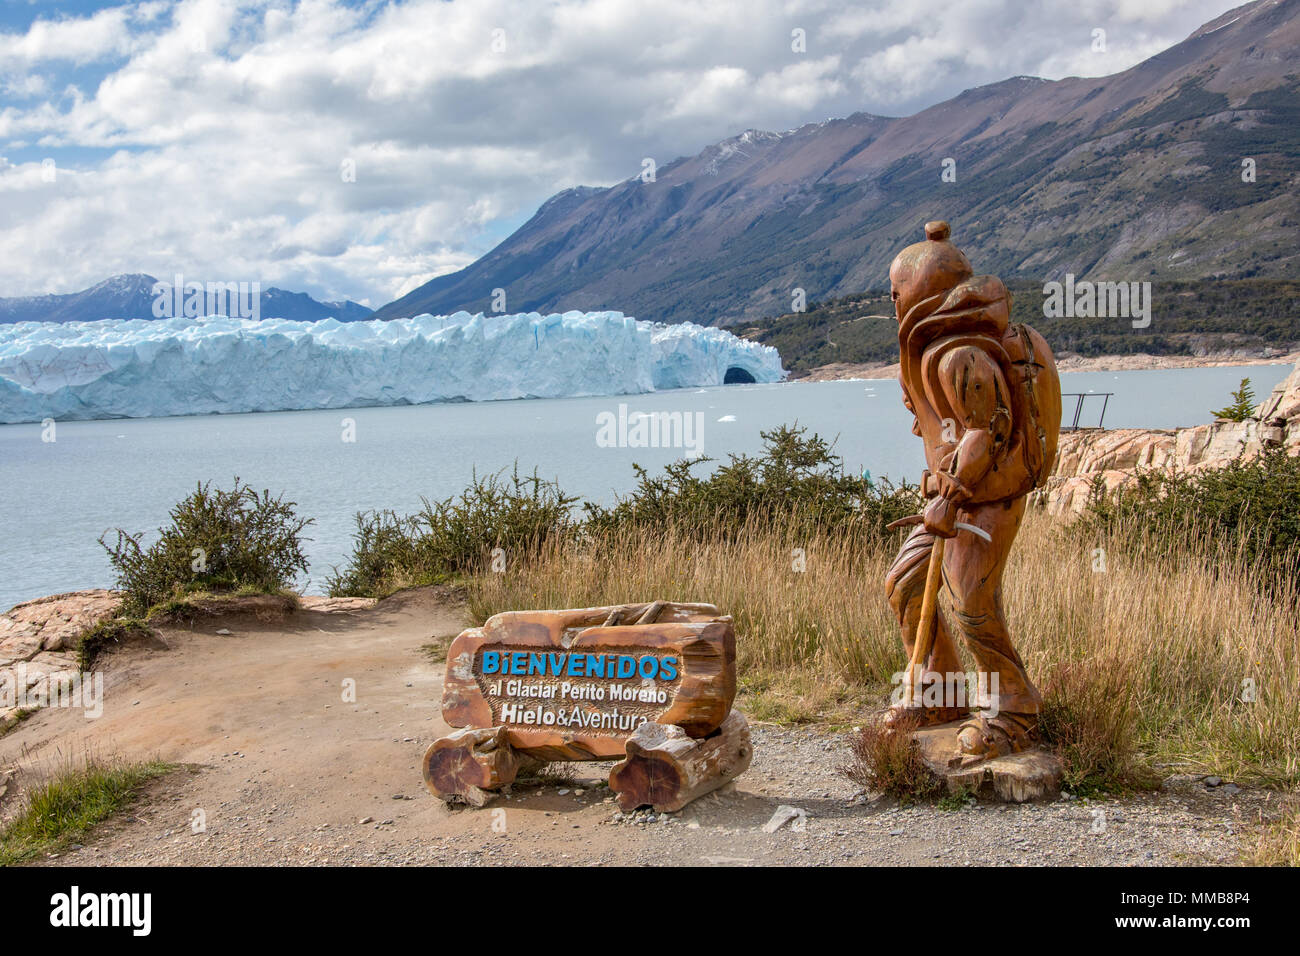 Hielo Y Aventura Grand Tour de glace, le Glacier Perito Moreno, Glaciar Perito Moreno, Argentine Banque D'Images